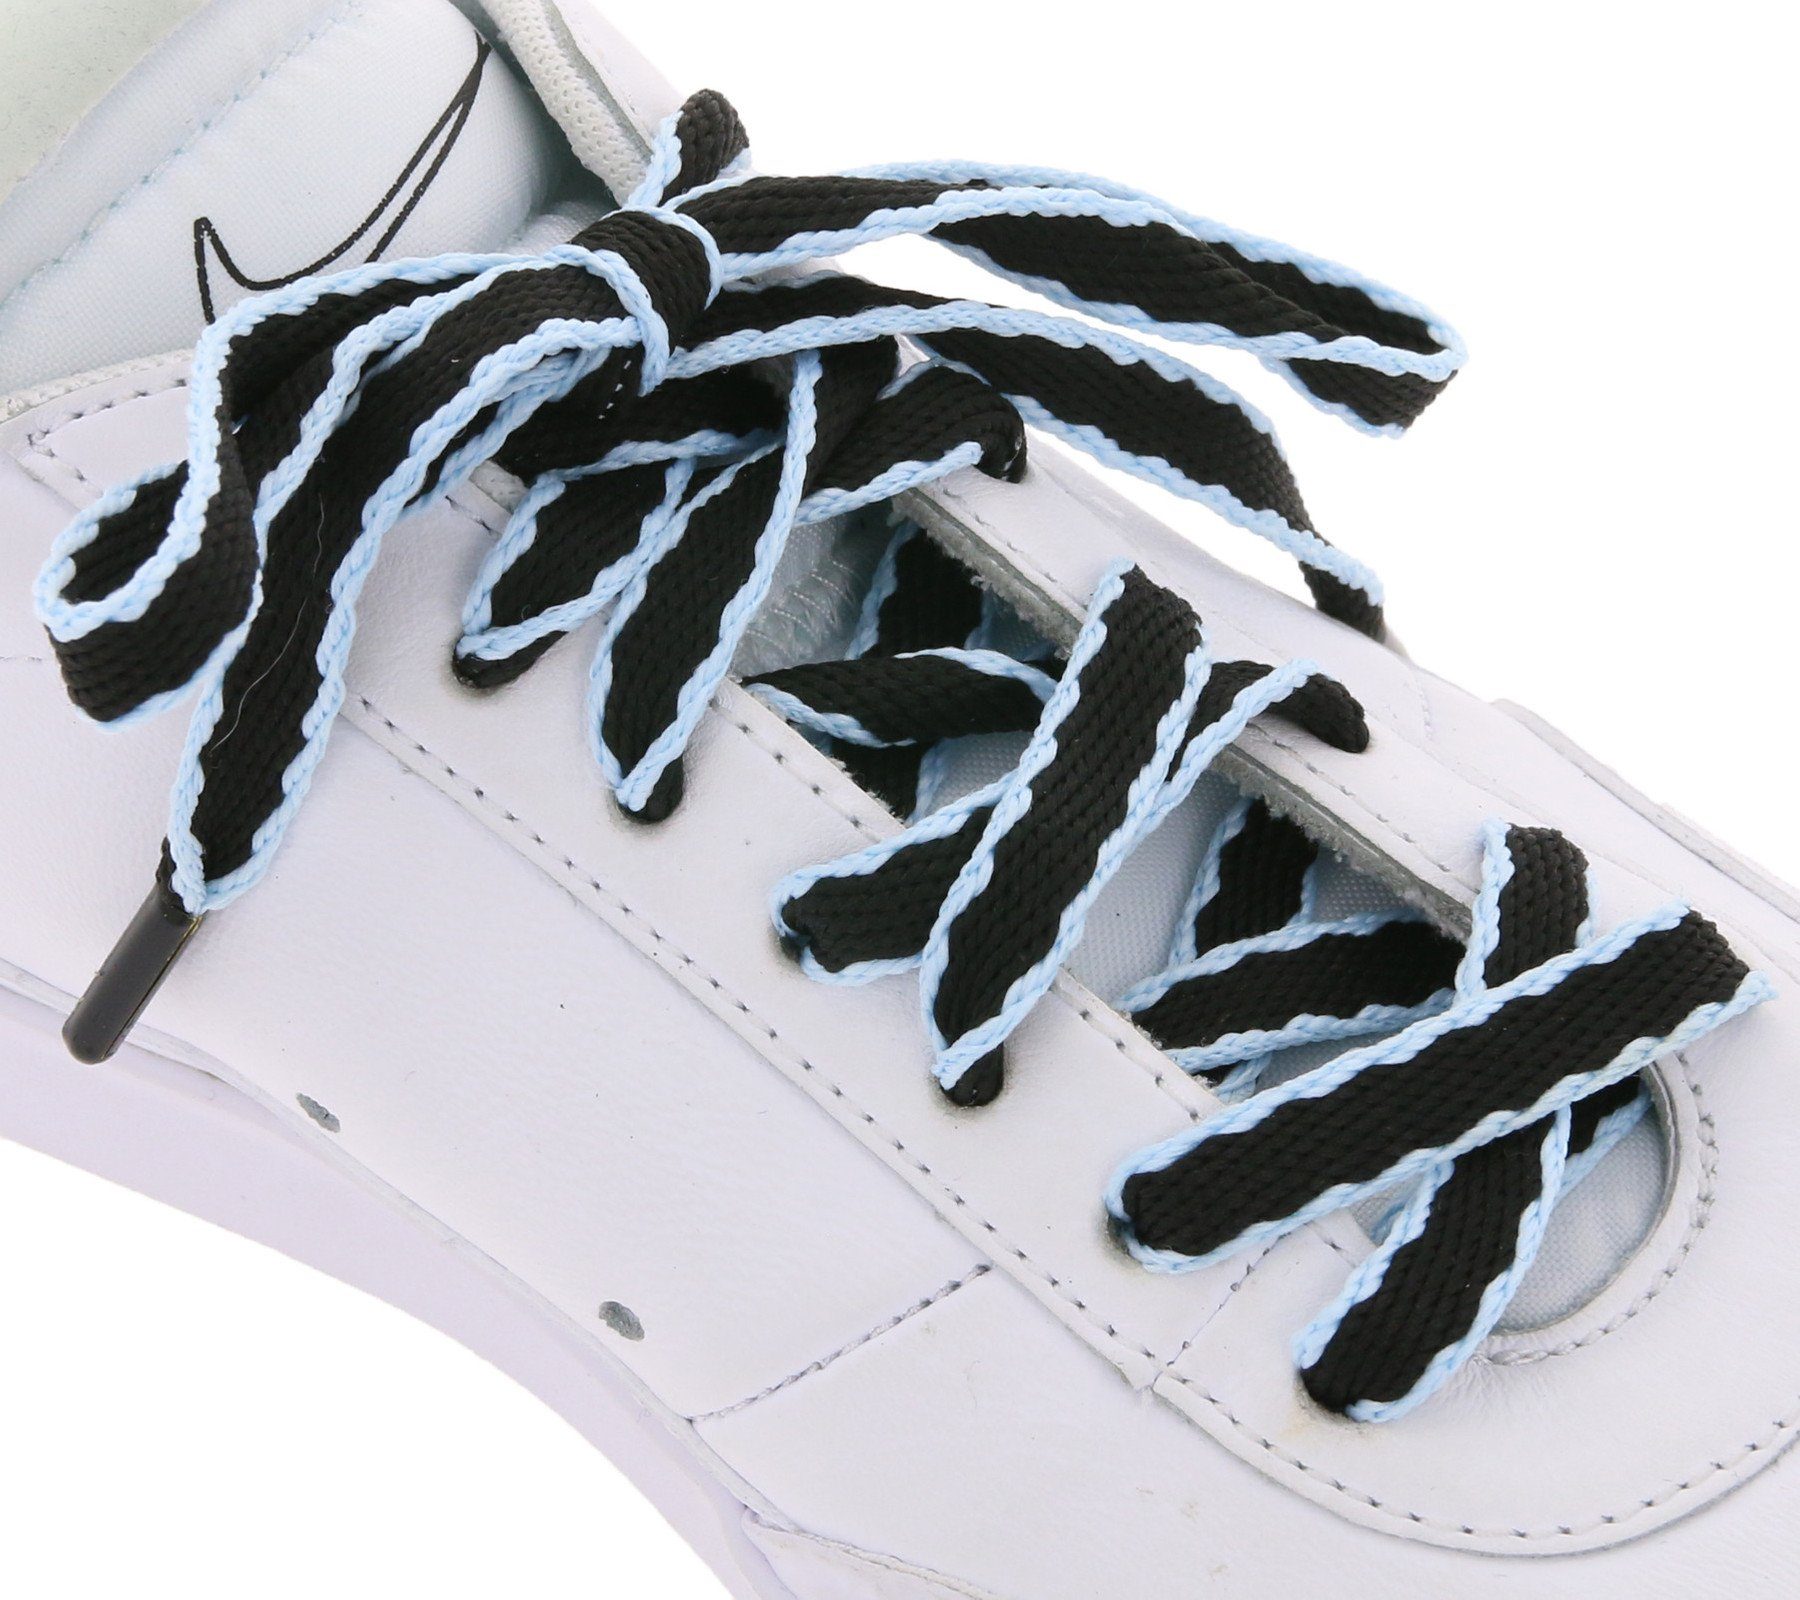 Tubelaces Schnürsenkel TubeLaces Schuhe Schnürbänder zweifarbige Schnürsenkel Schuhbänder Schwarz/Hellblau